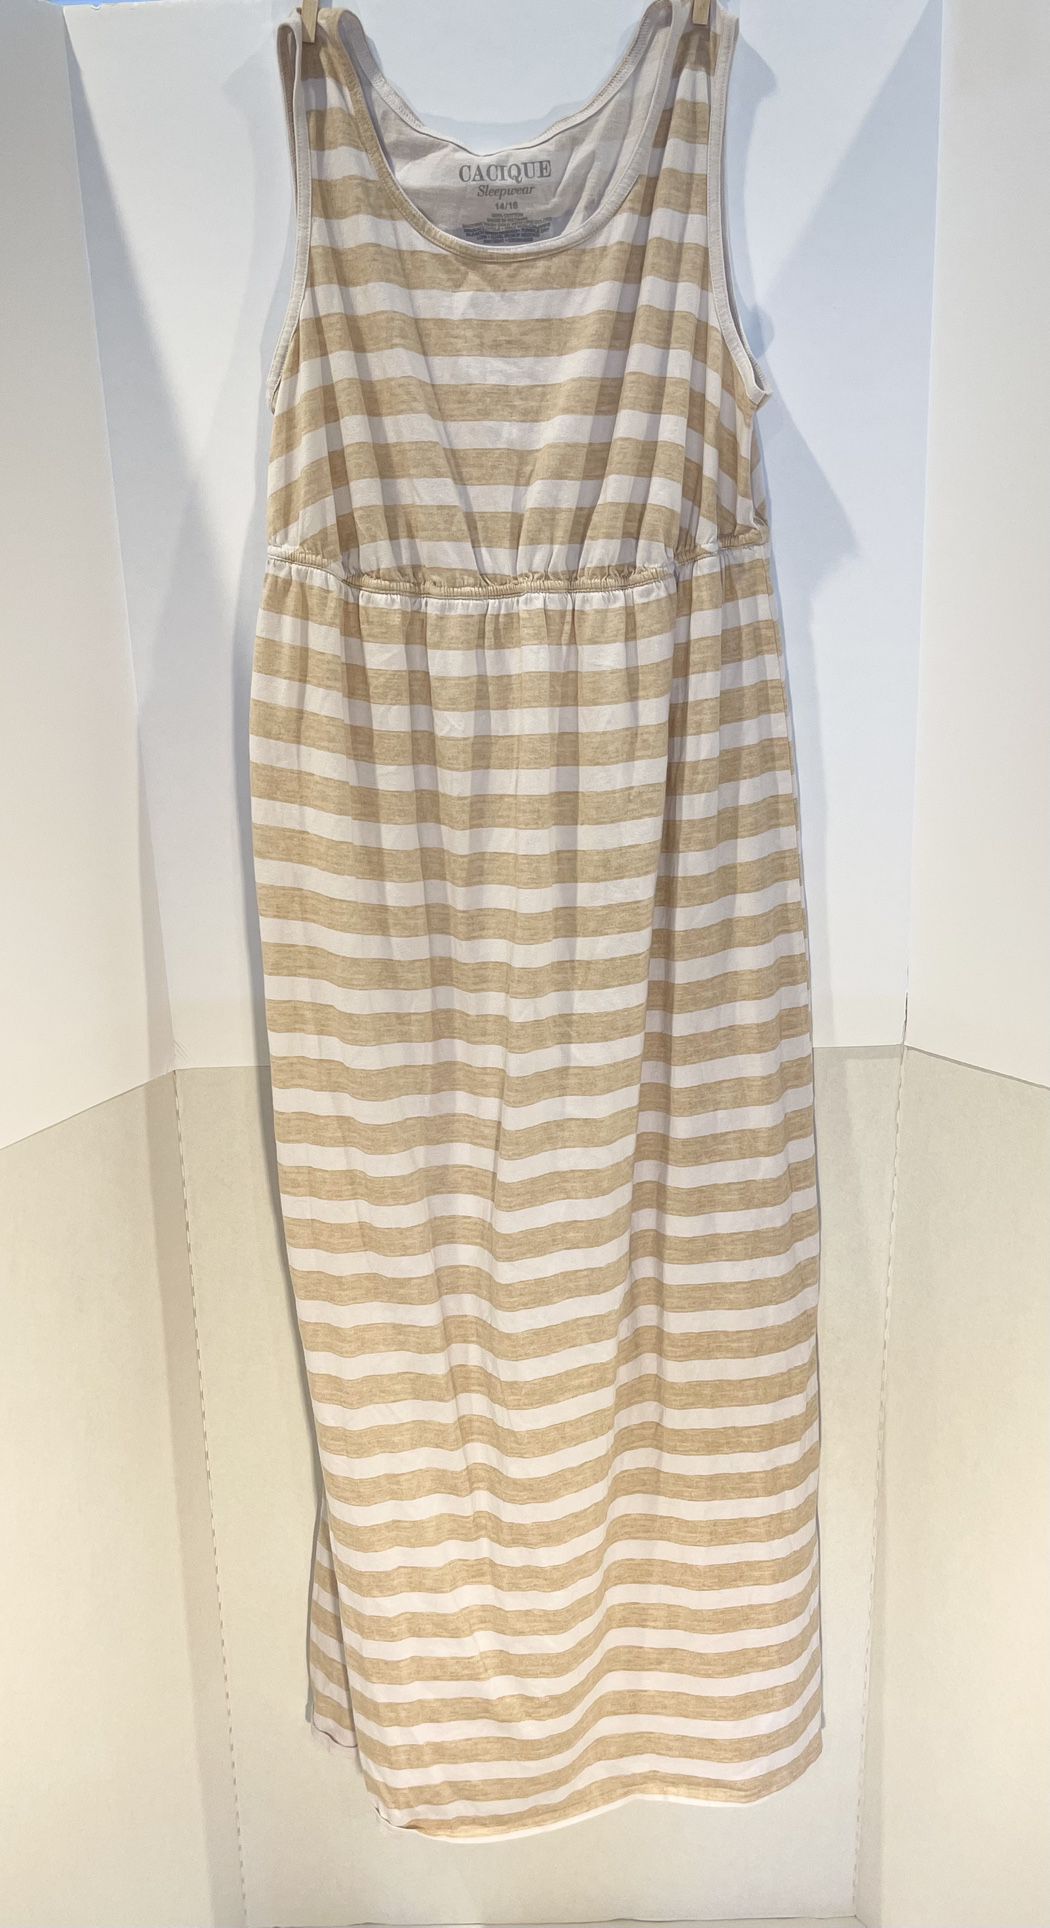 Cacique Sleepwear - Sleeveless Nightgown - White & Beige Striped - L (14/16)